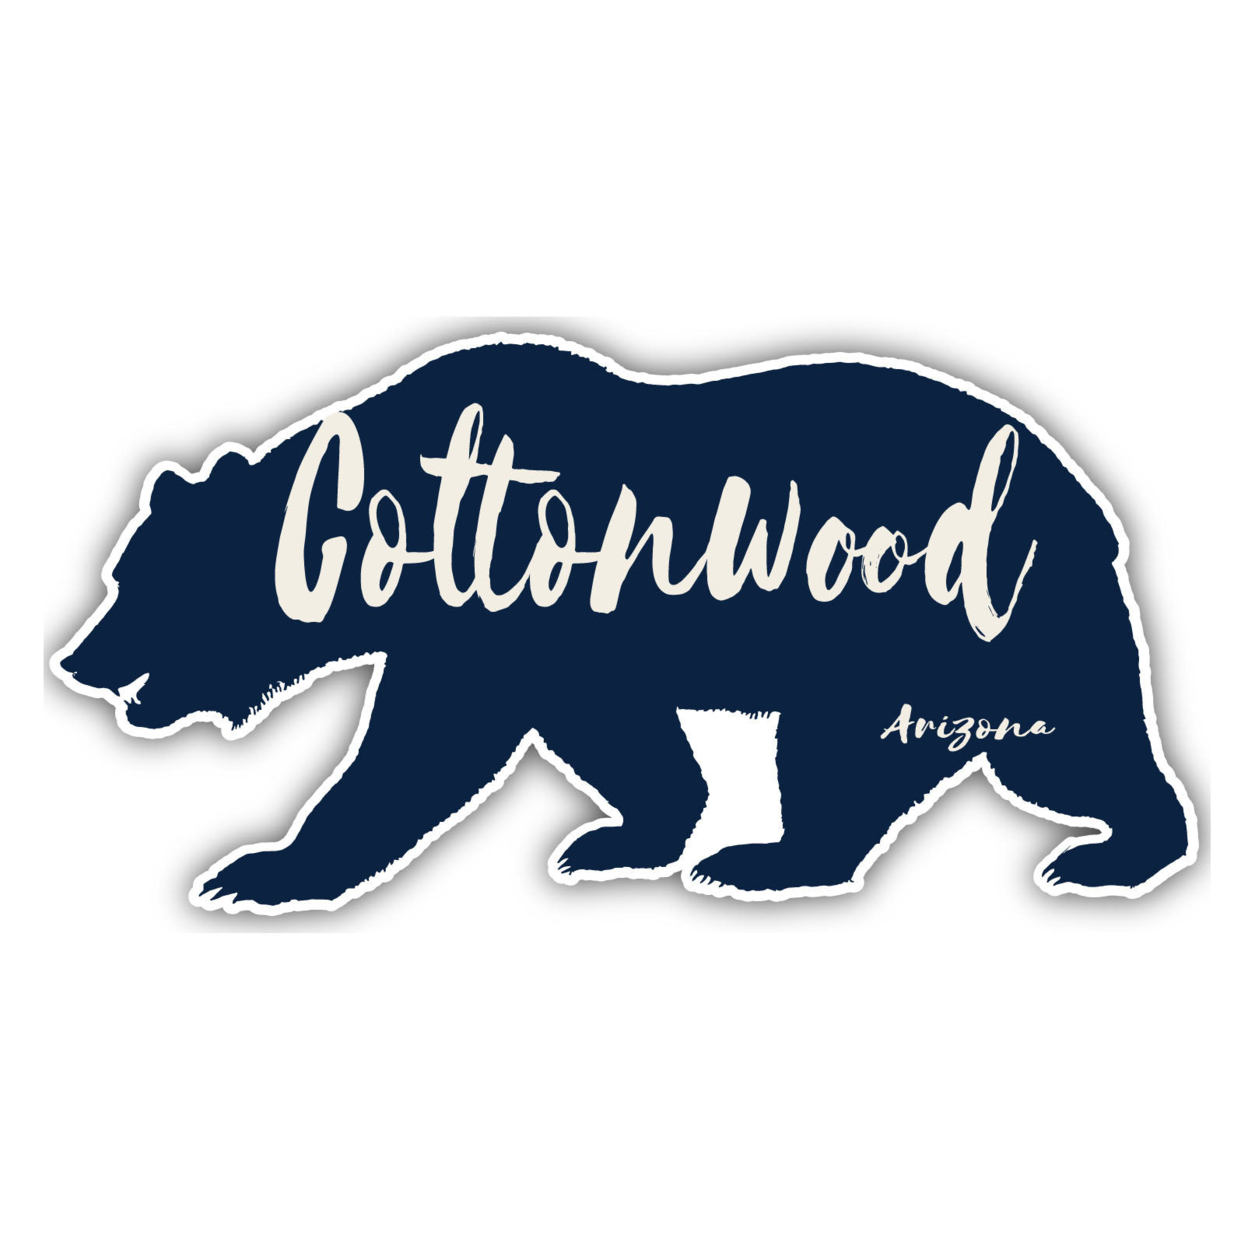 Cottonwood Arizona Souvenir Decorative Stickers (Choose Theme And Size) - Single Unit, 10-Inch, Bear